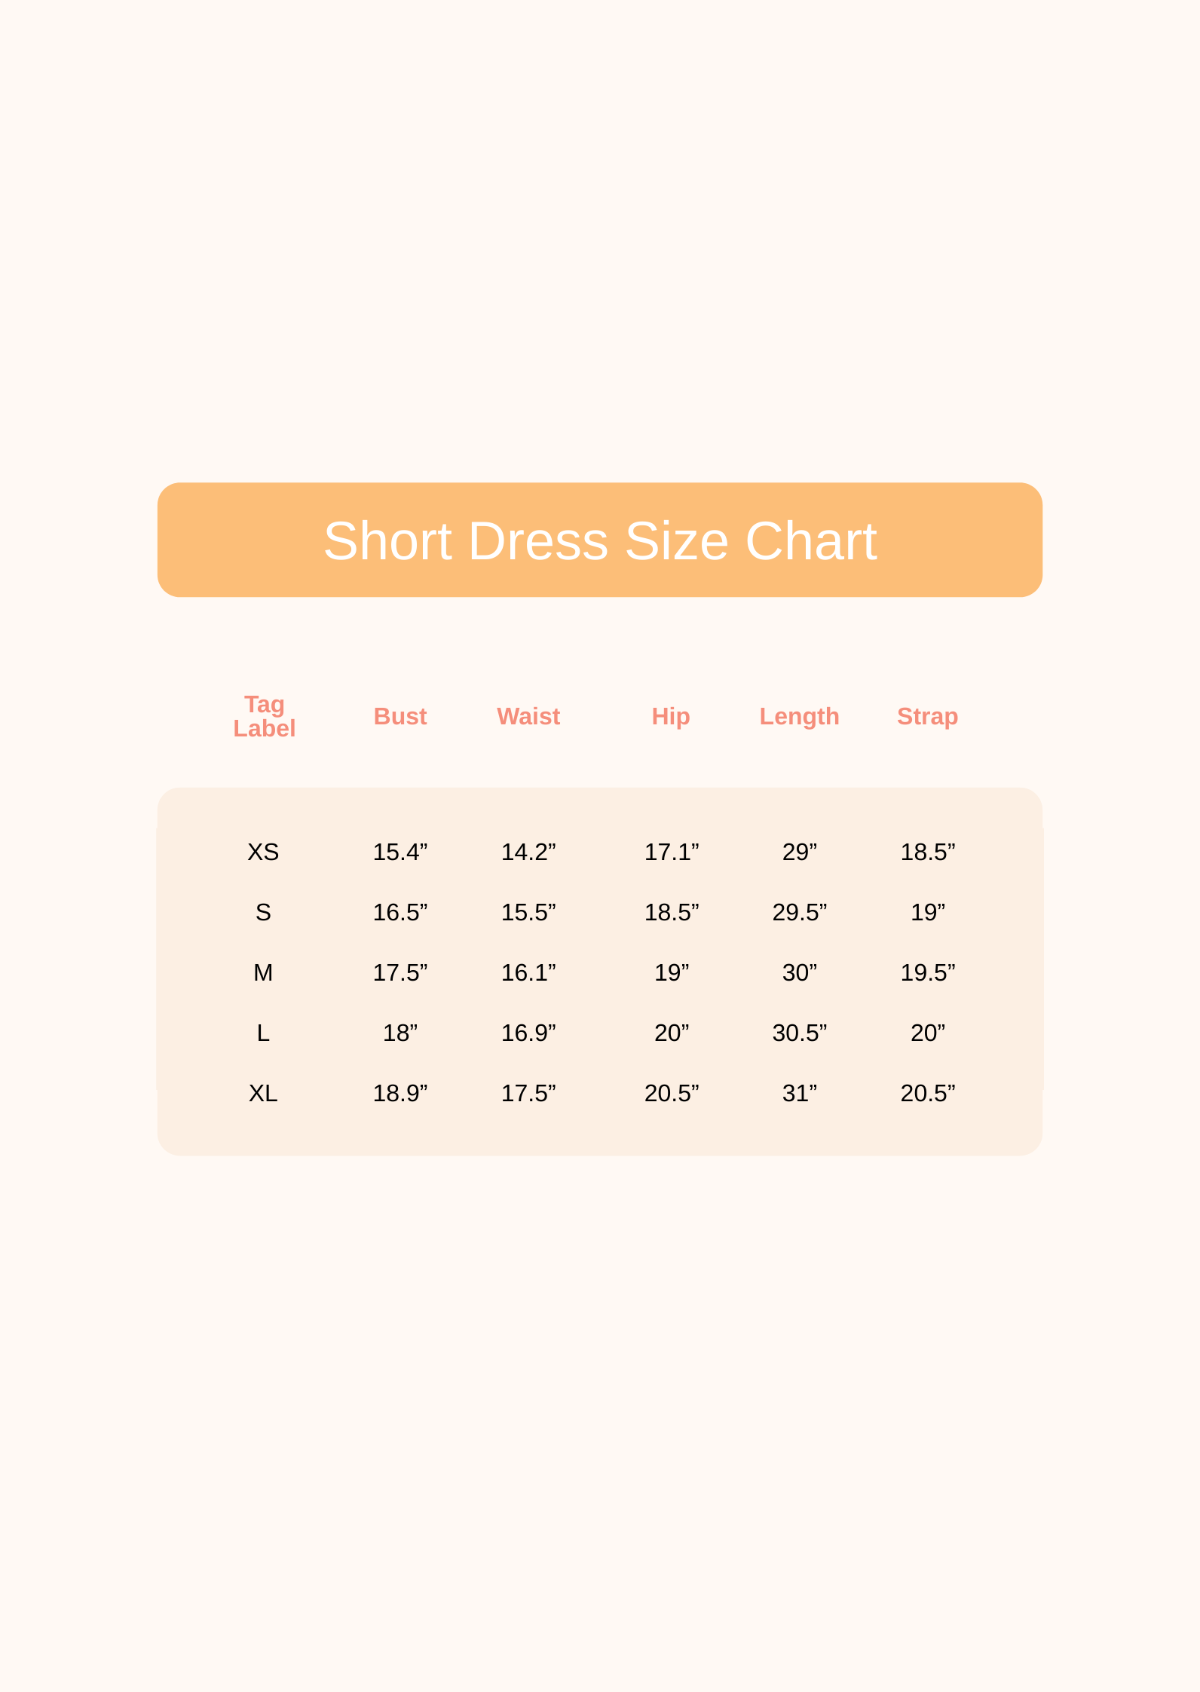 Free Short Dress Size Chart Template